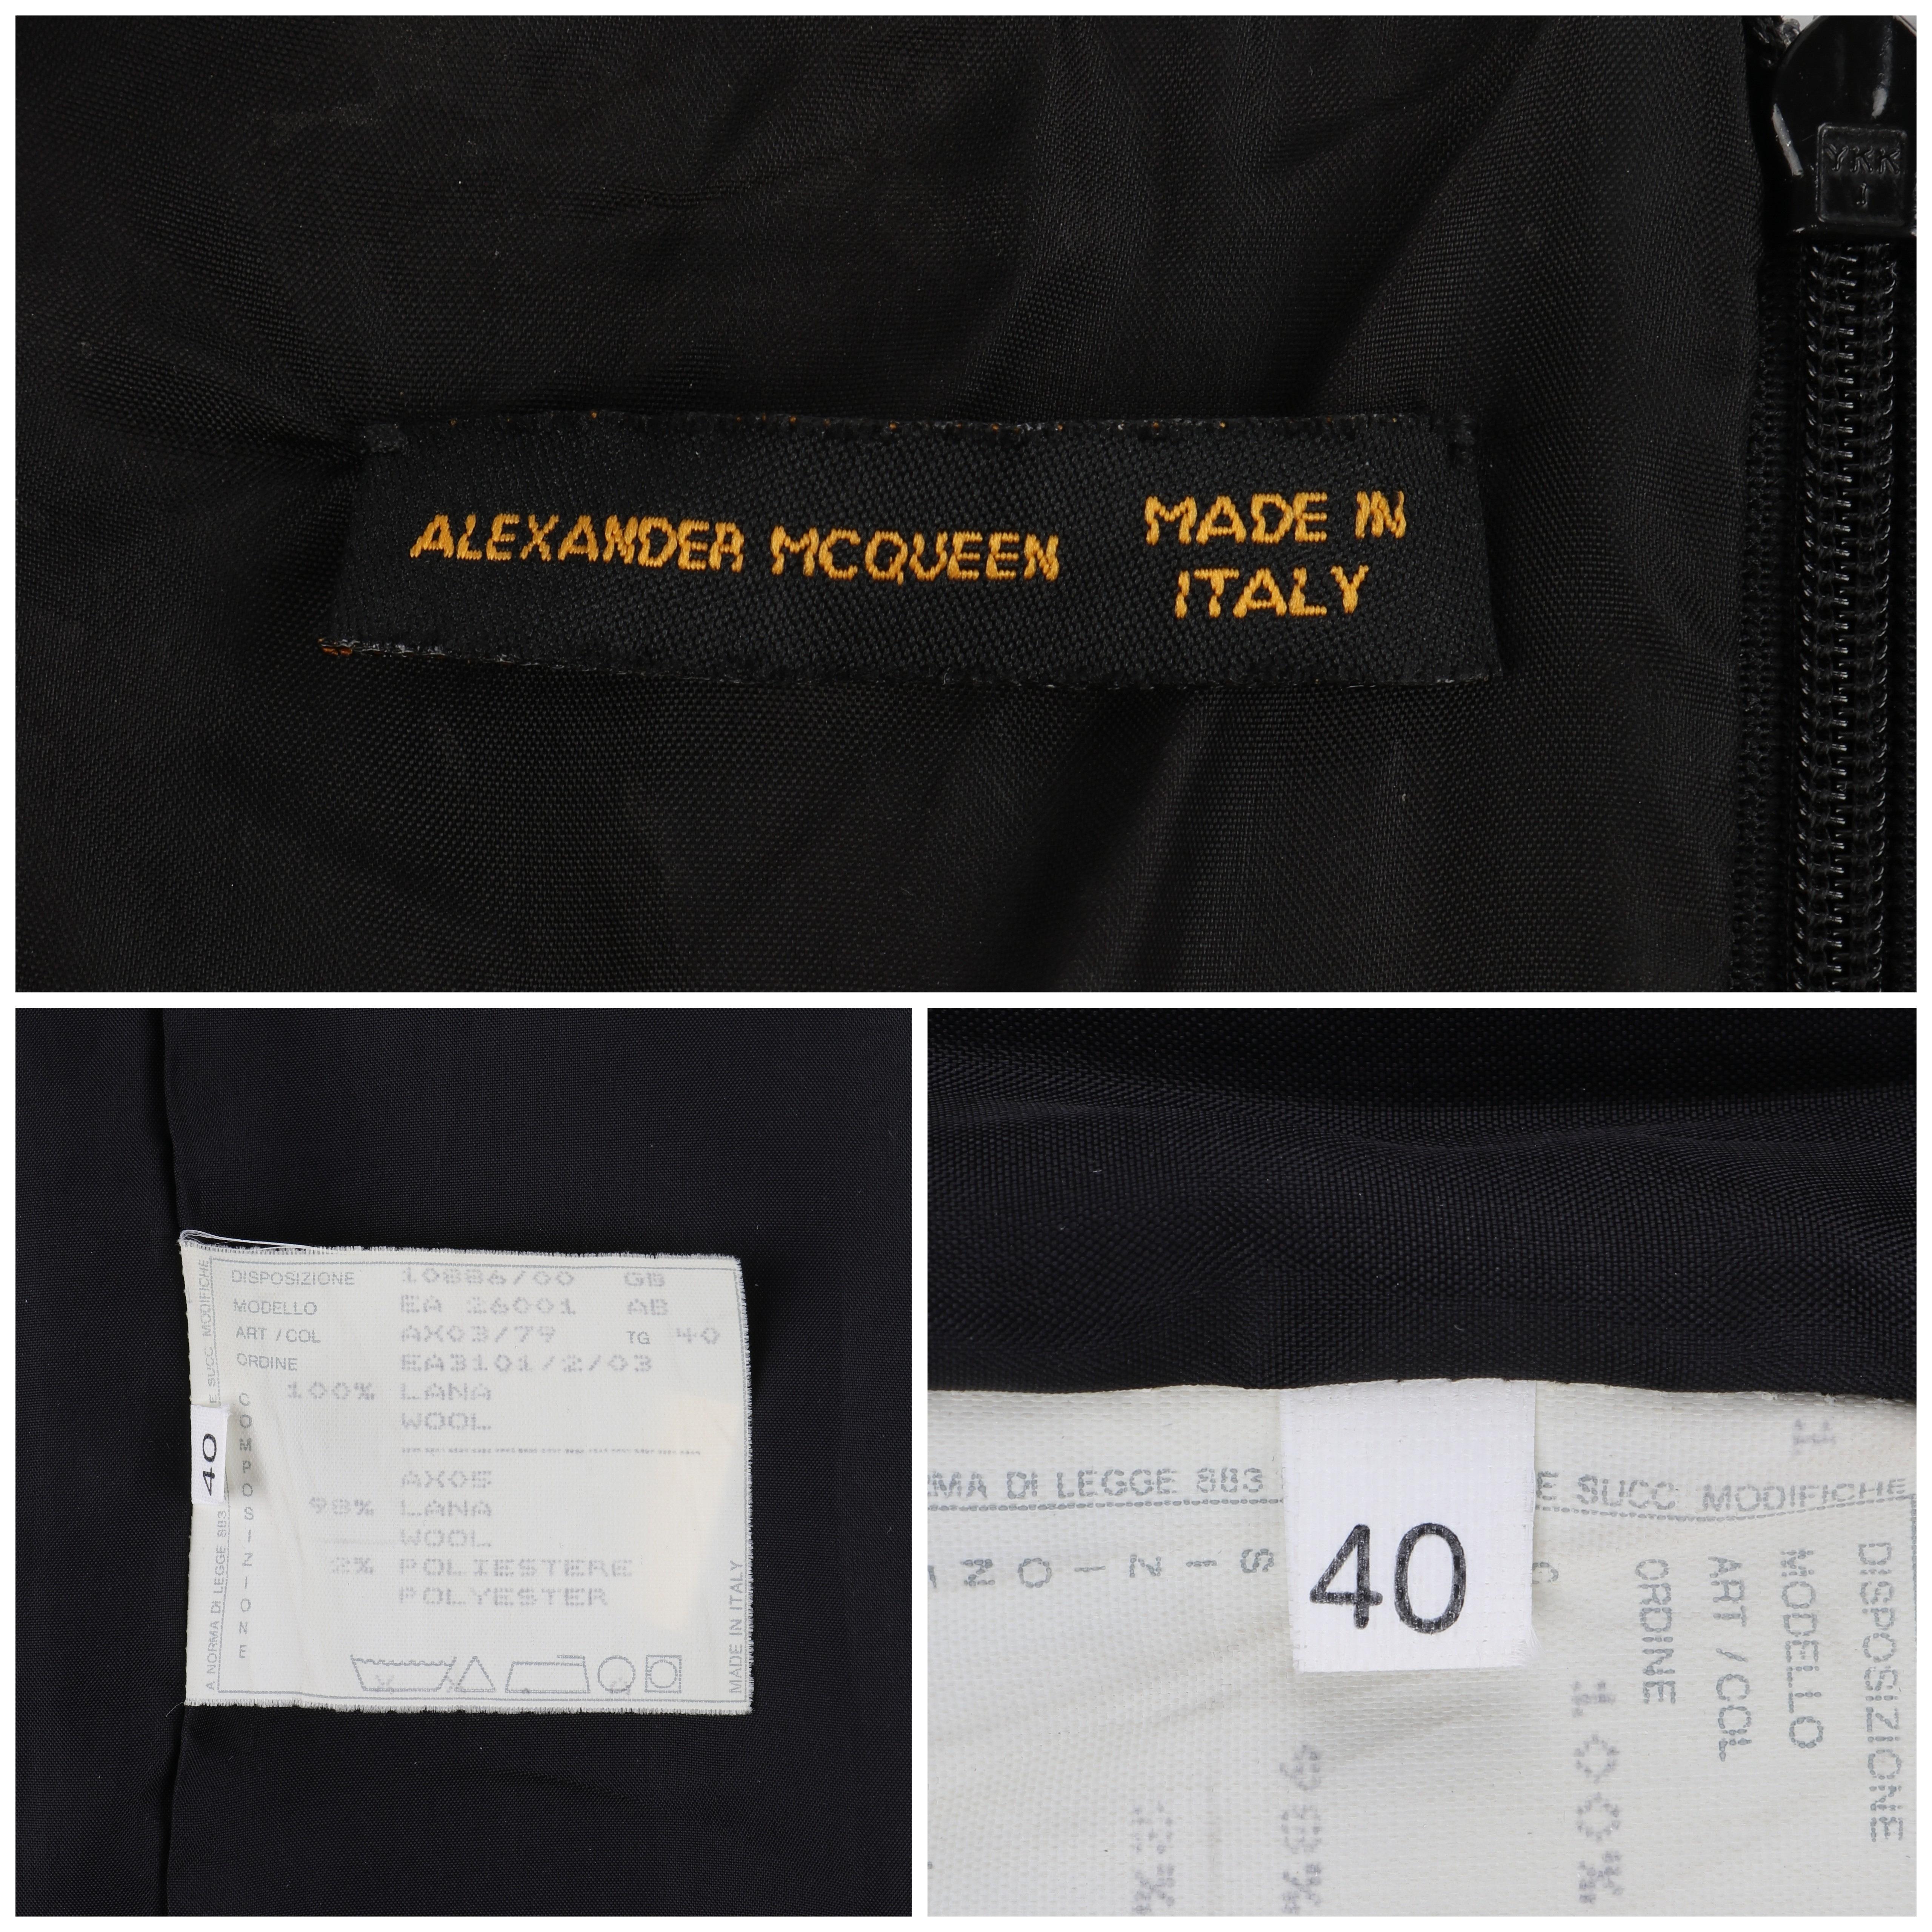 ALEXANDER McQUEEN S/S 1998 “Golden Shower” Gray Black Plunge Neck Sheath Dress For Sale 4